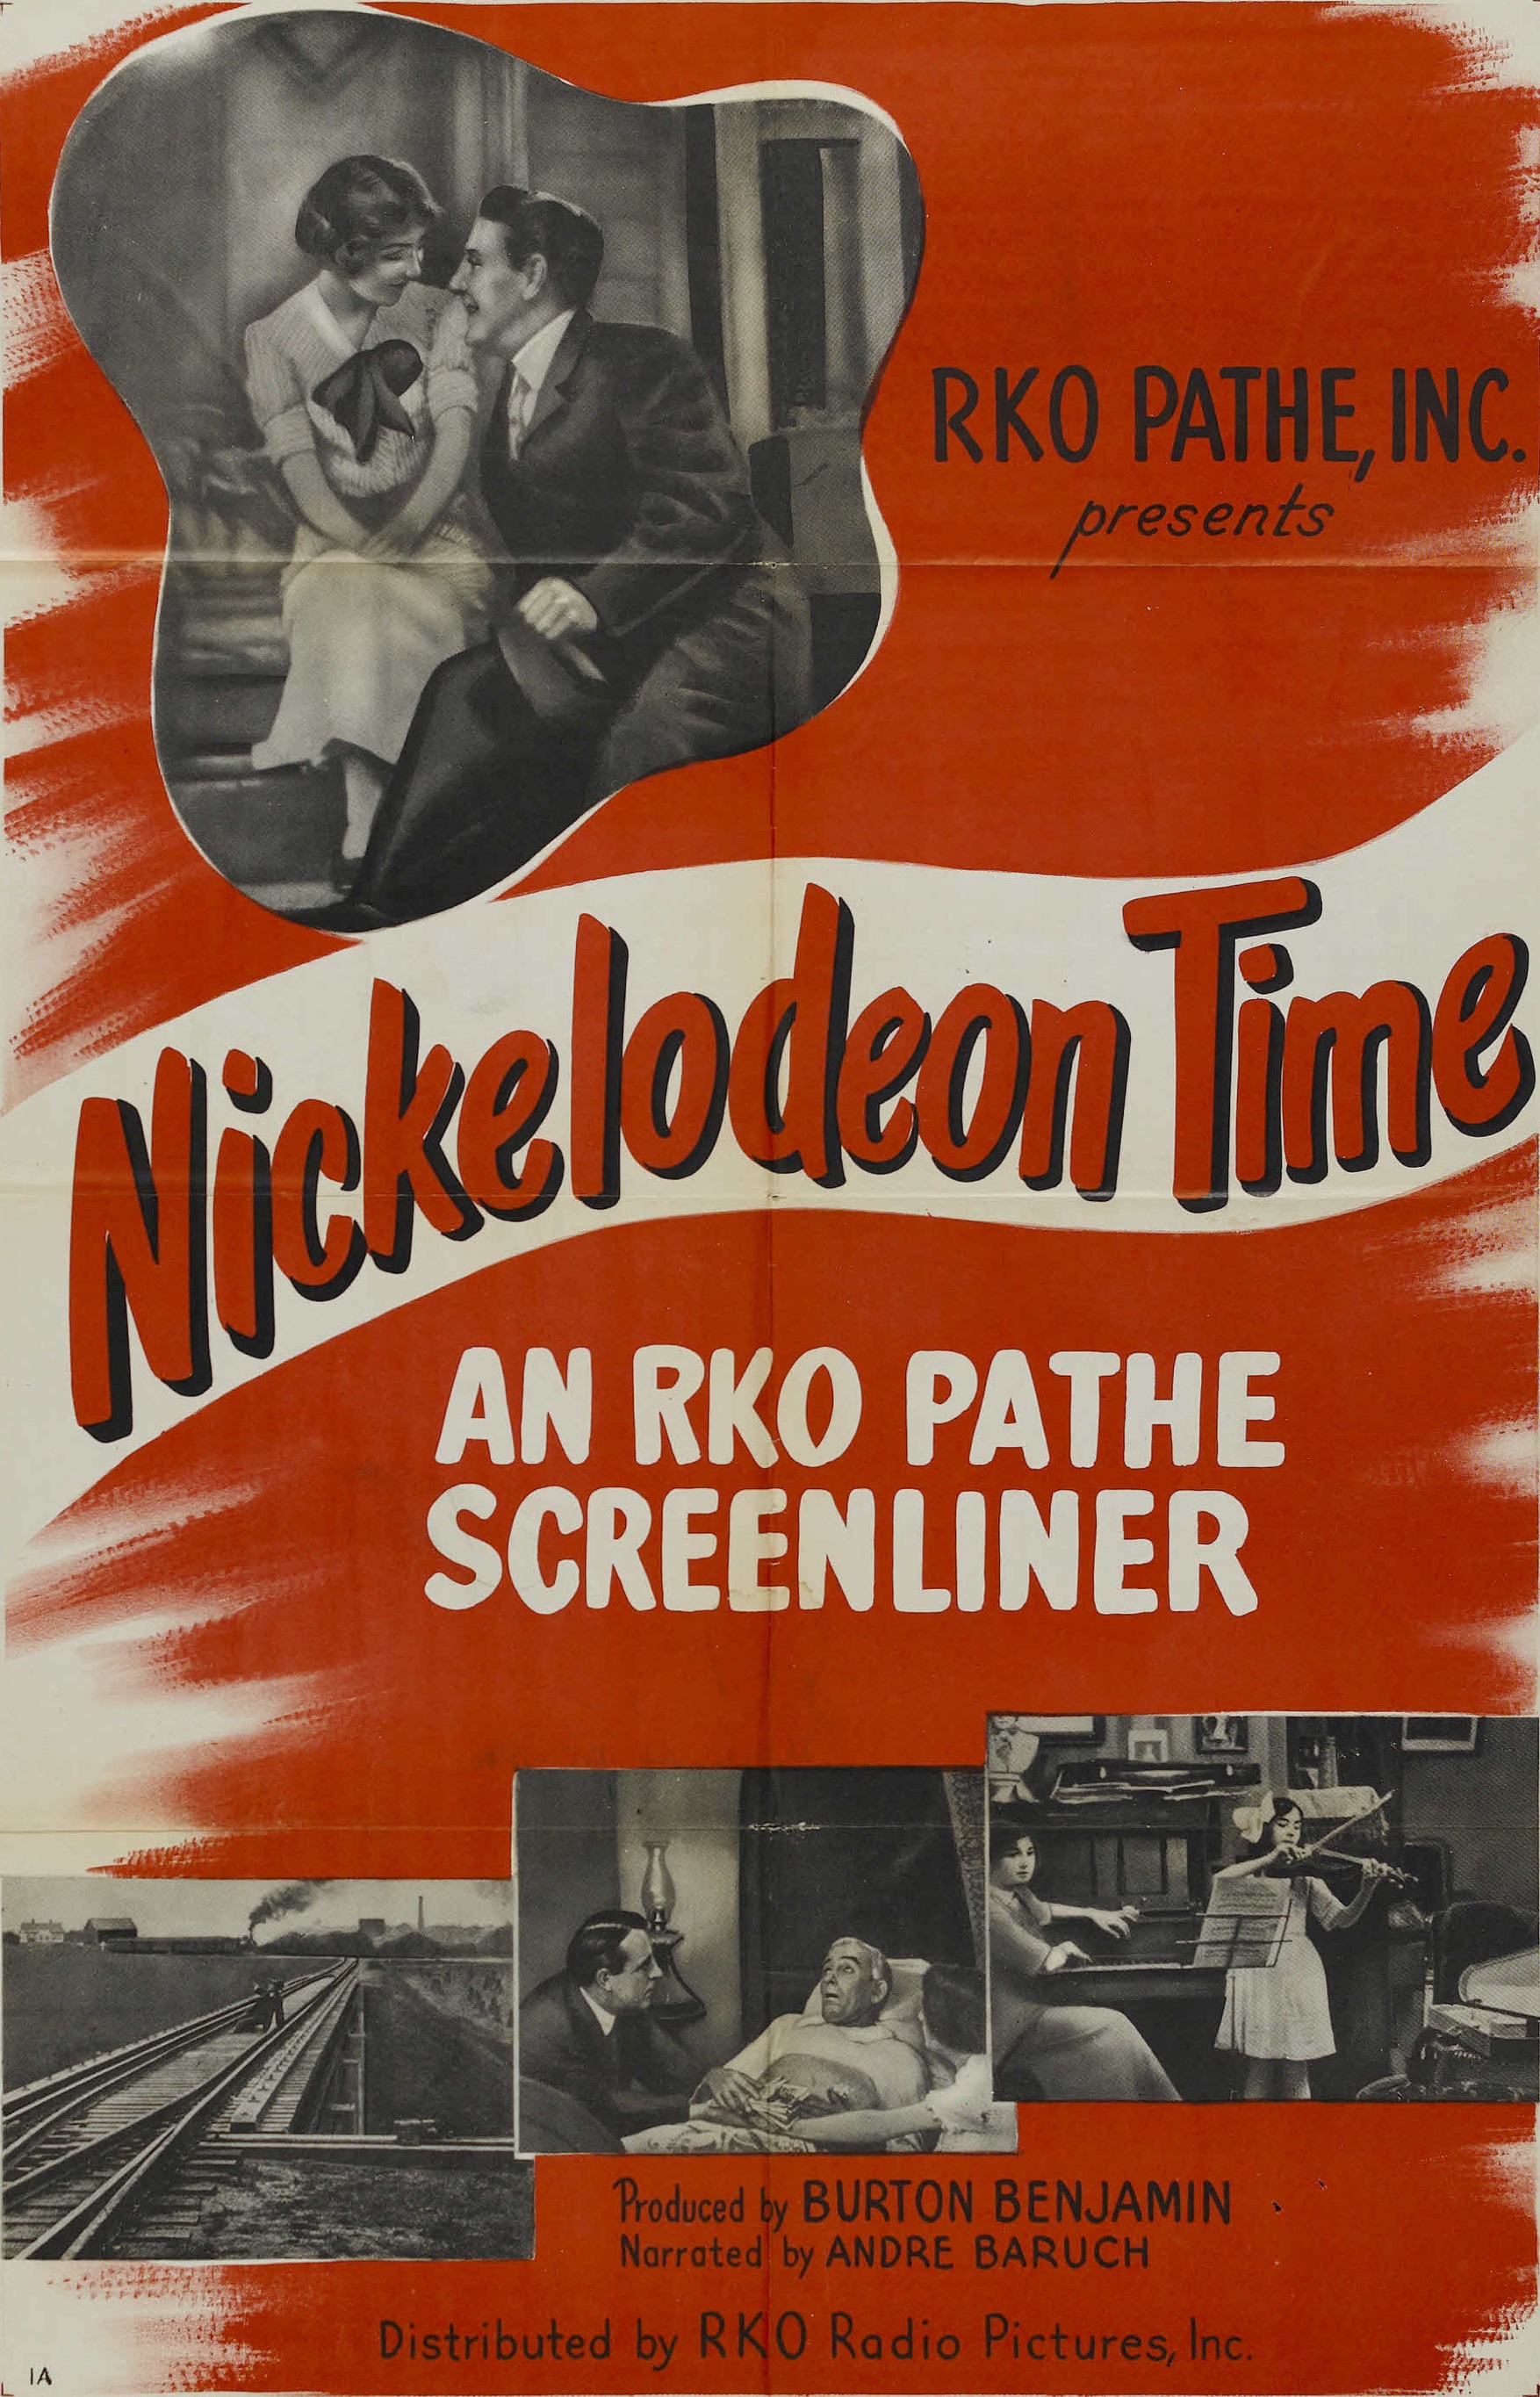 Nickelodeon Time